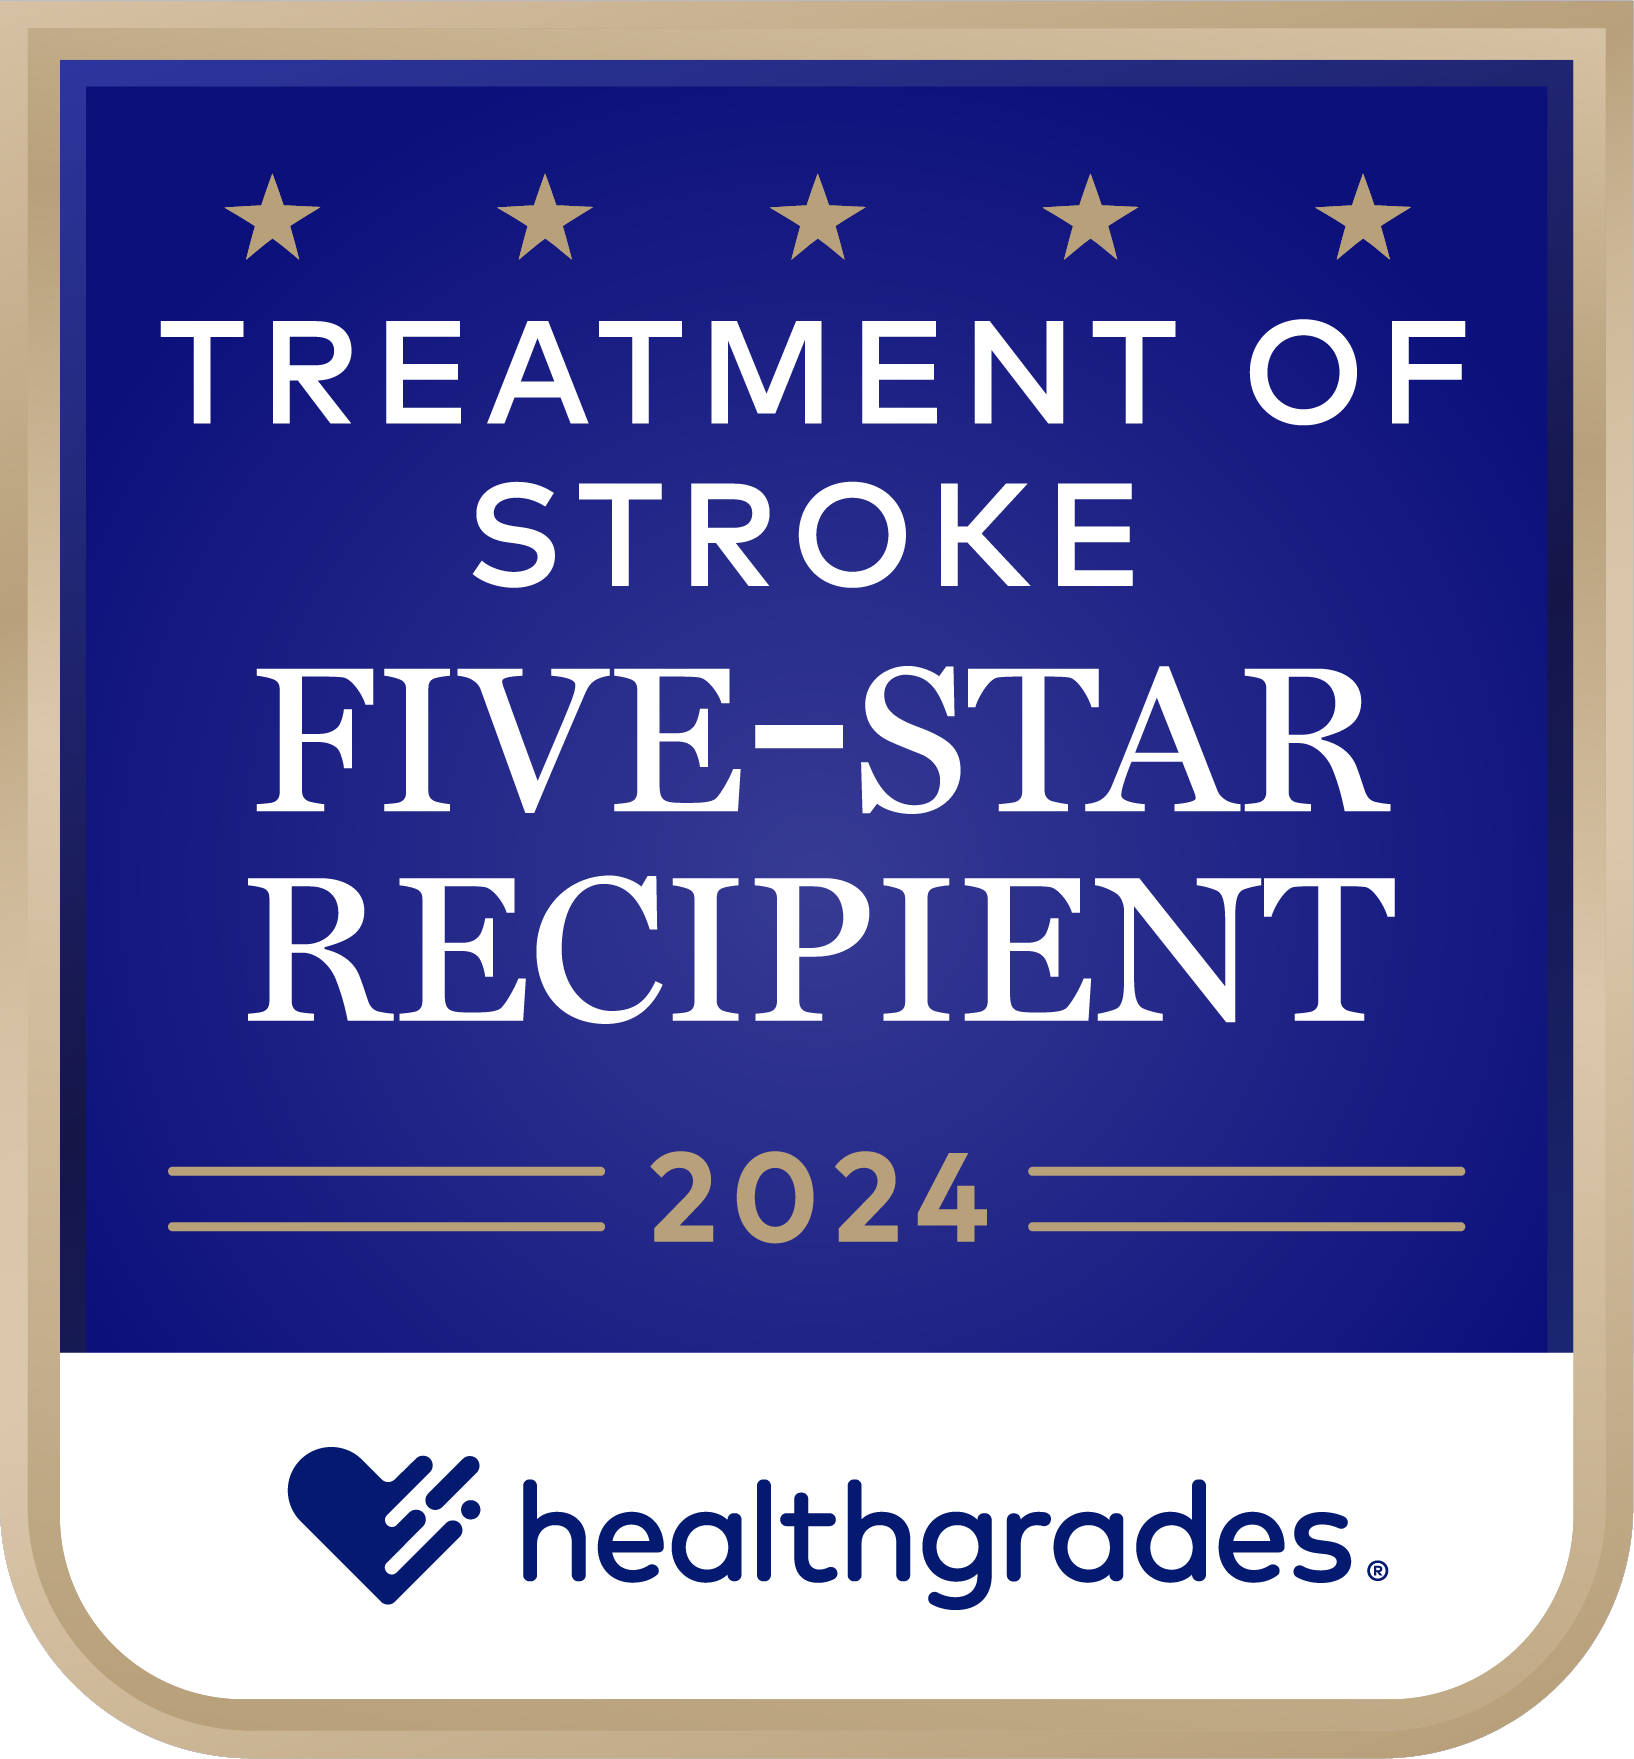 Treatment Of Stroke-2020- Fiver Star Recipient Healthgrades